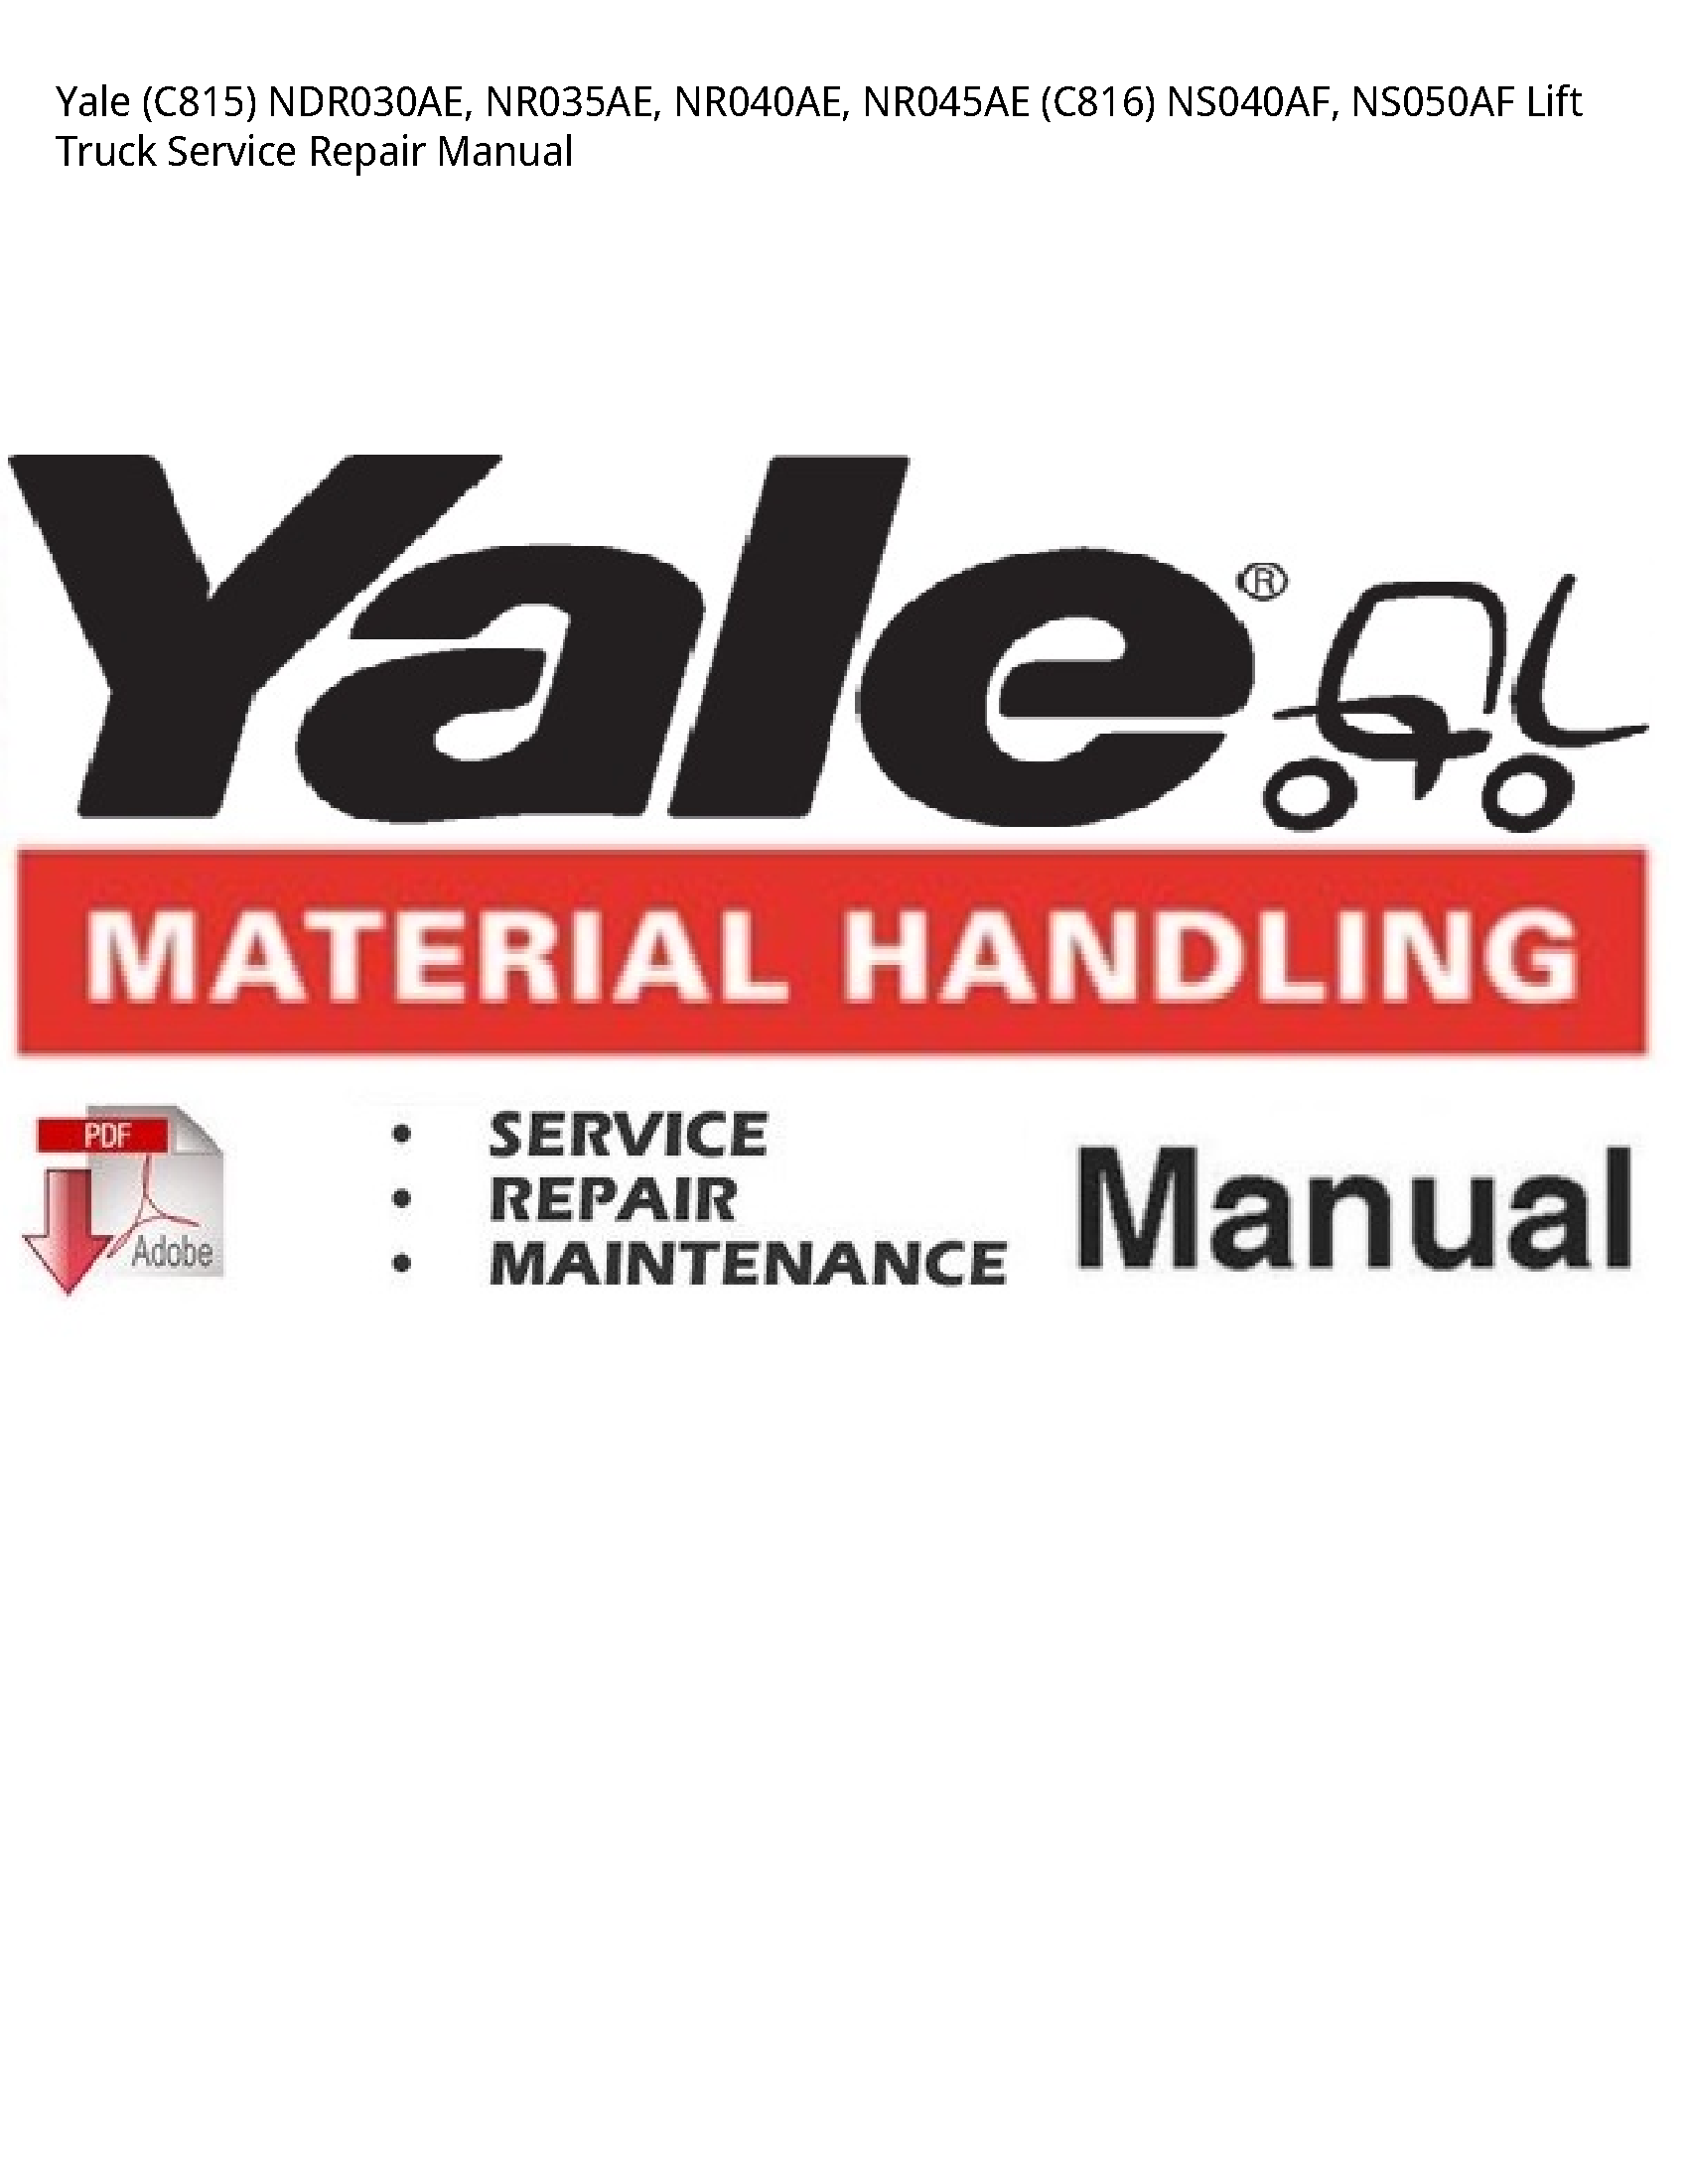 Yale (C815) Lift Truck manual